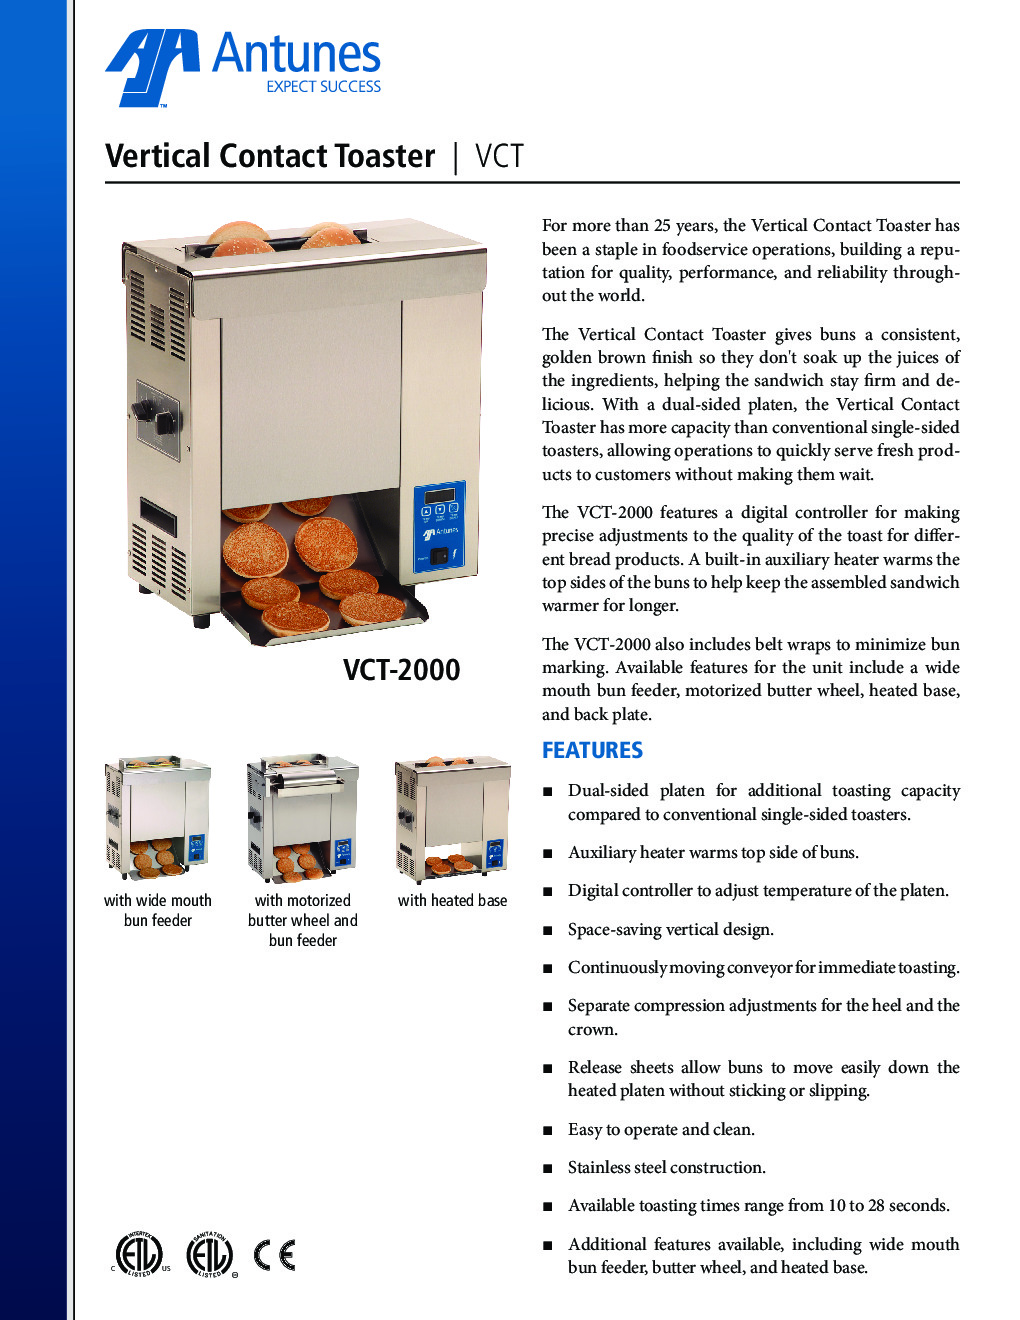 Antunes VCT-2000-9210304 Countertop Conveyor Type Vertical Contact Toaster